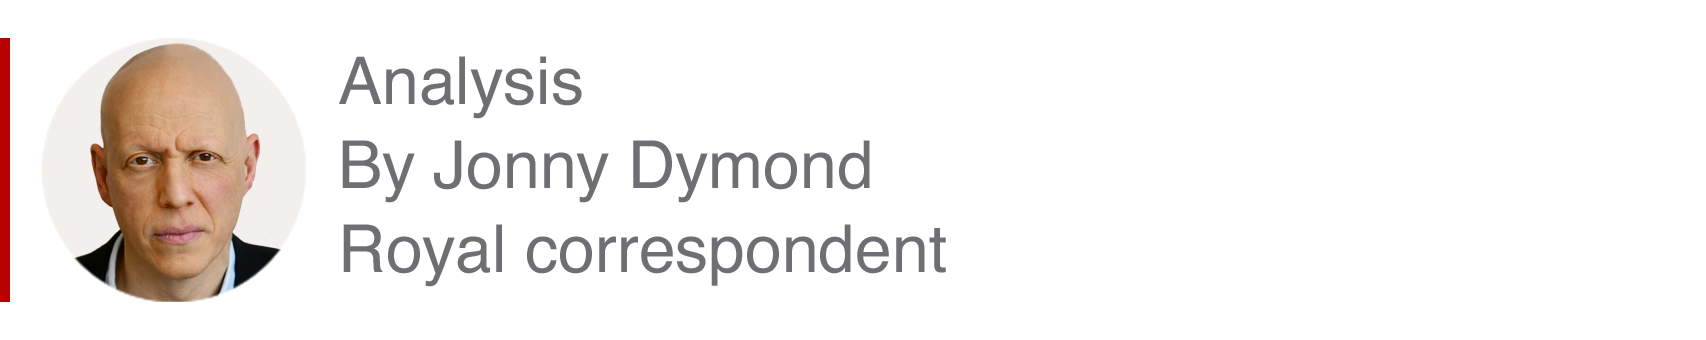 Analysis box by Jonny Dymond, royal correspondent